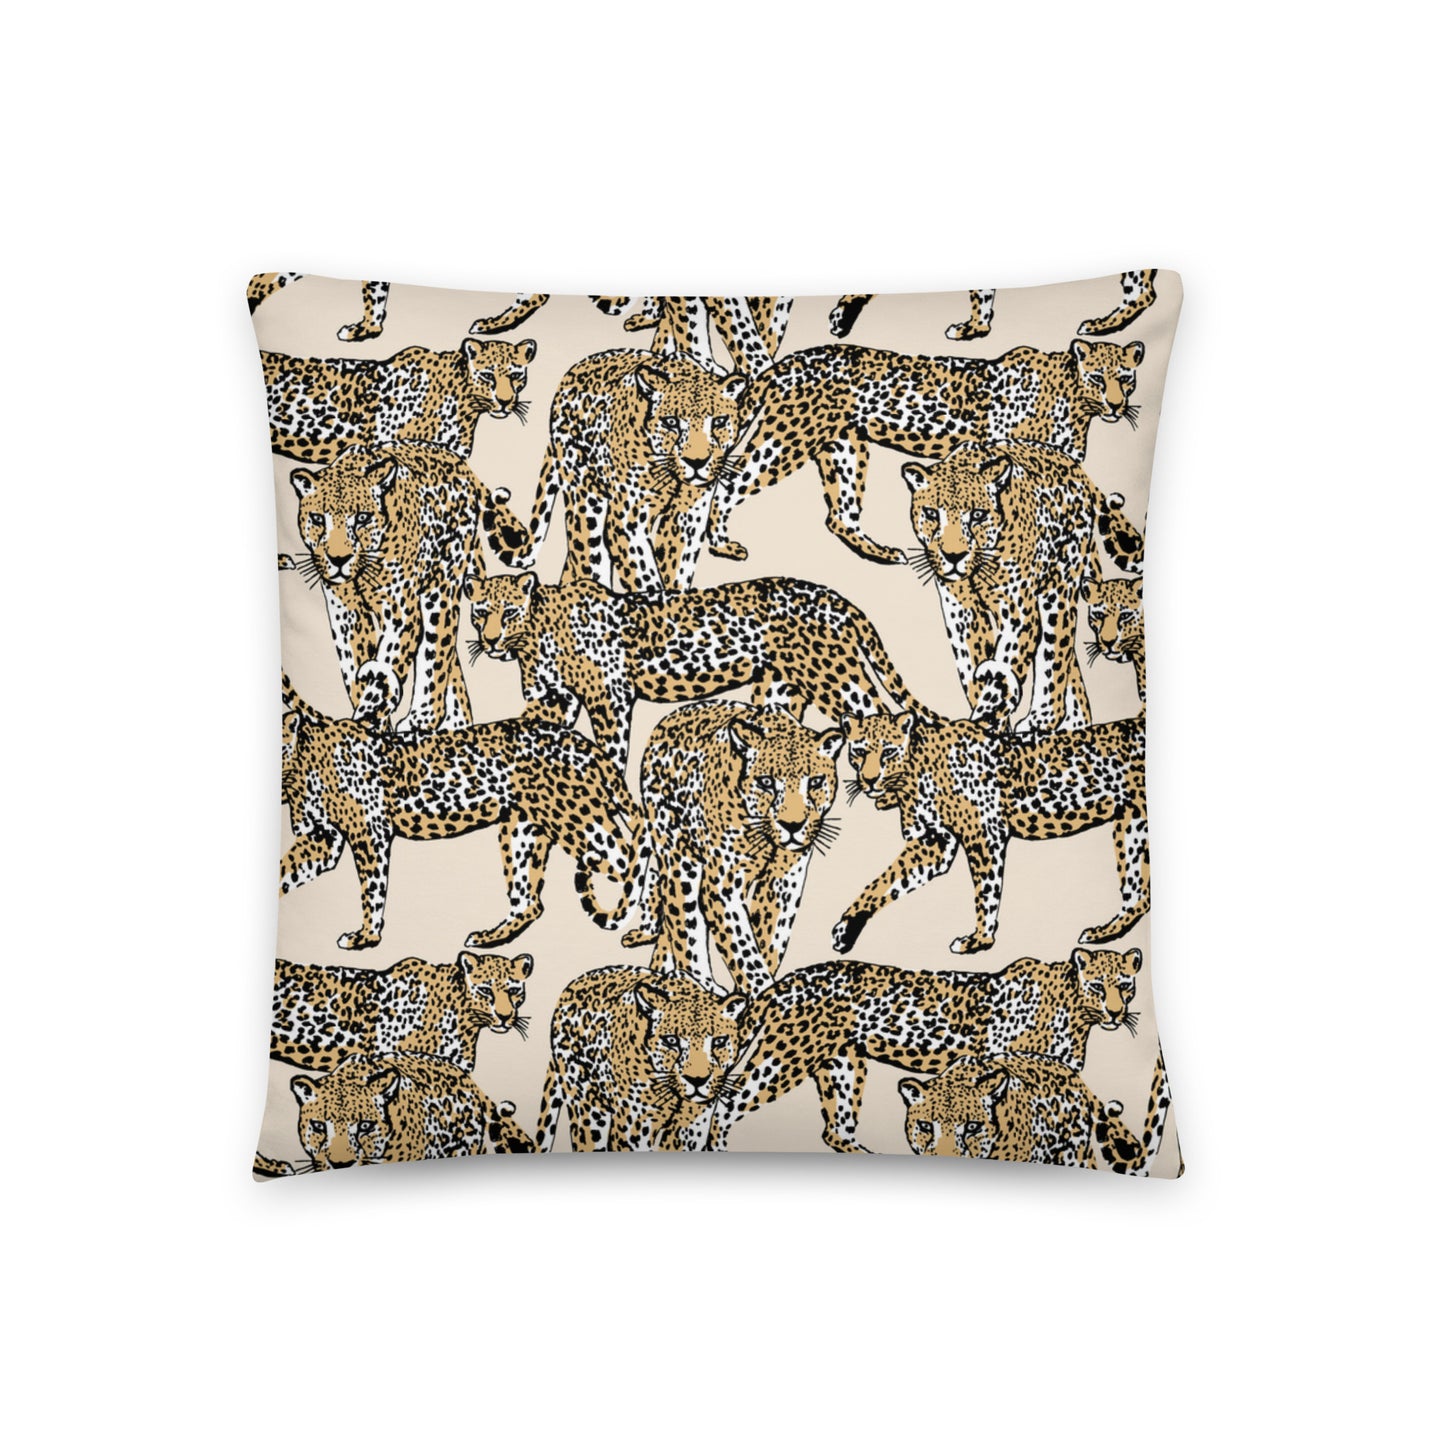 A soft throw pillow printed with Cheetahs